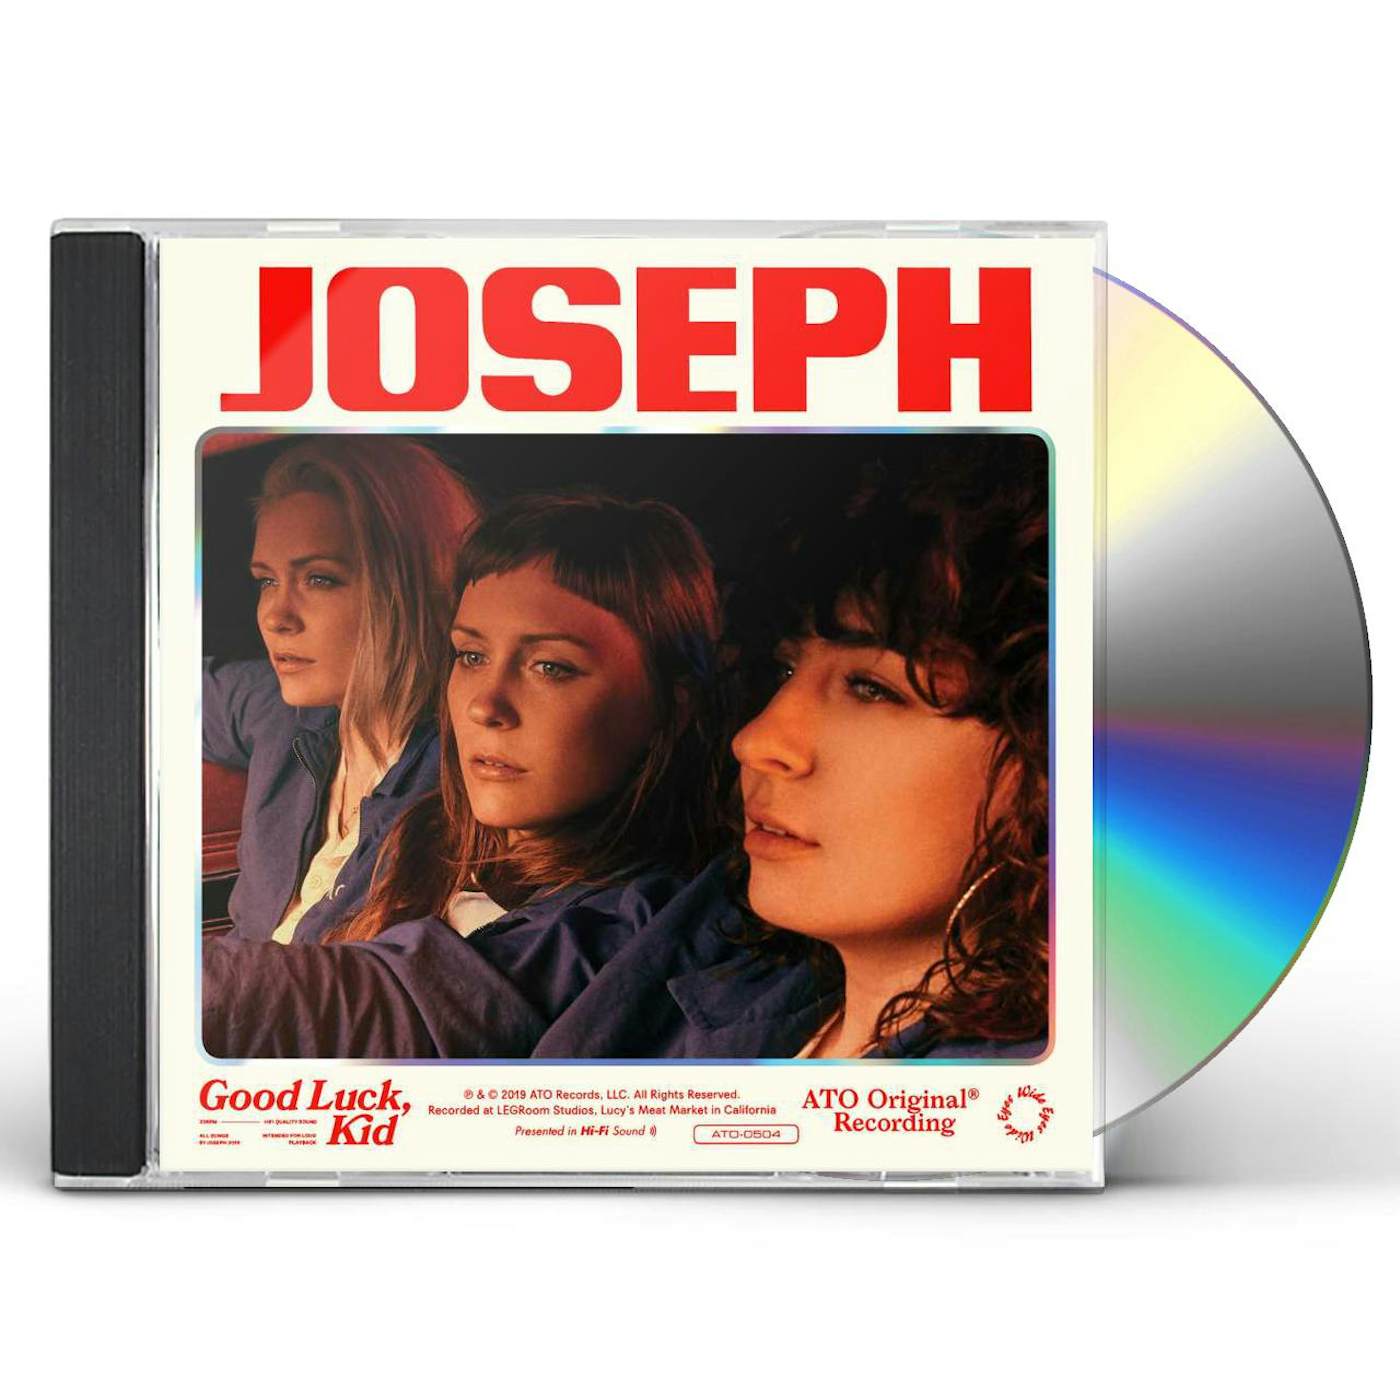 JOSEPH GOOD LUCK KID CD